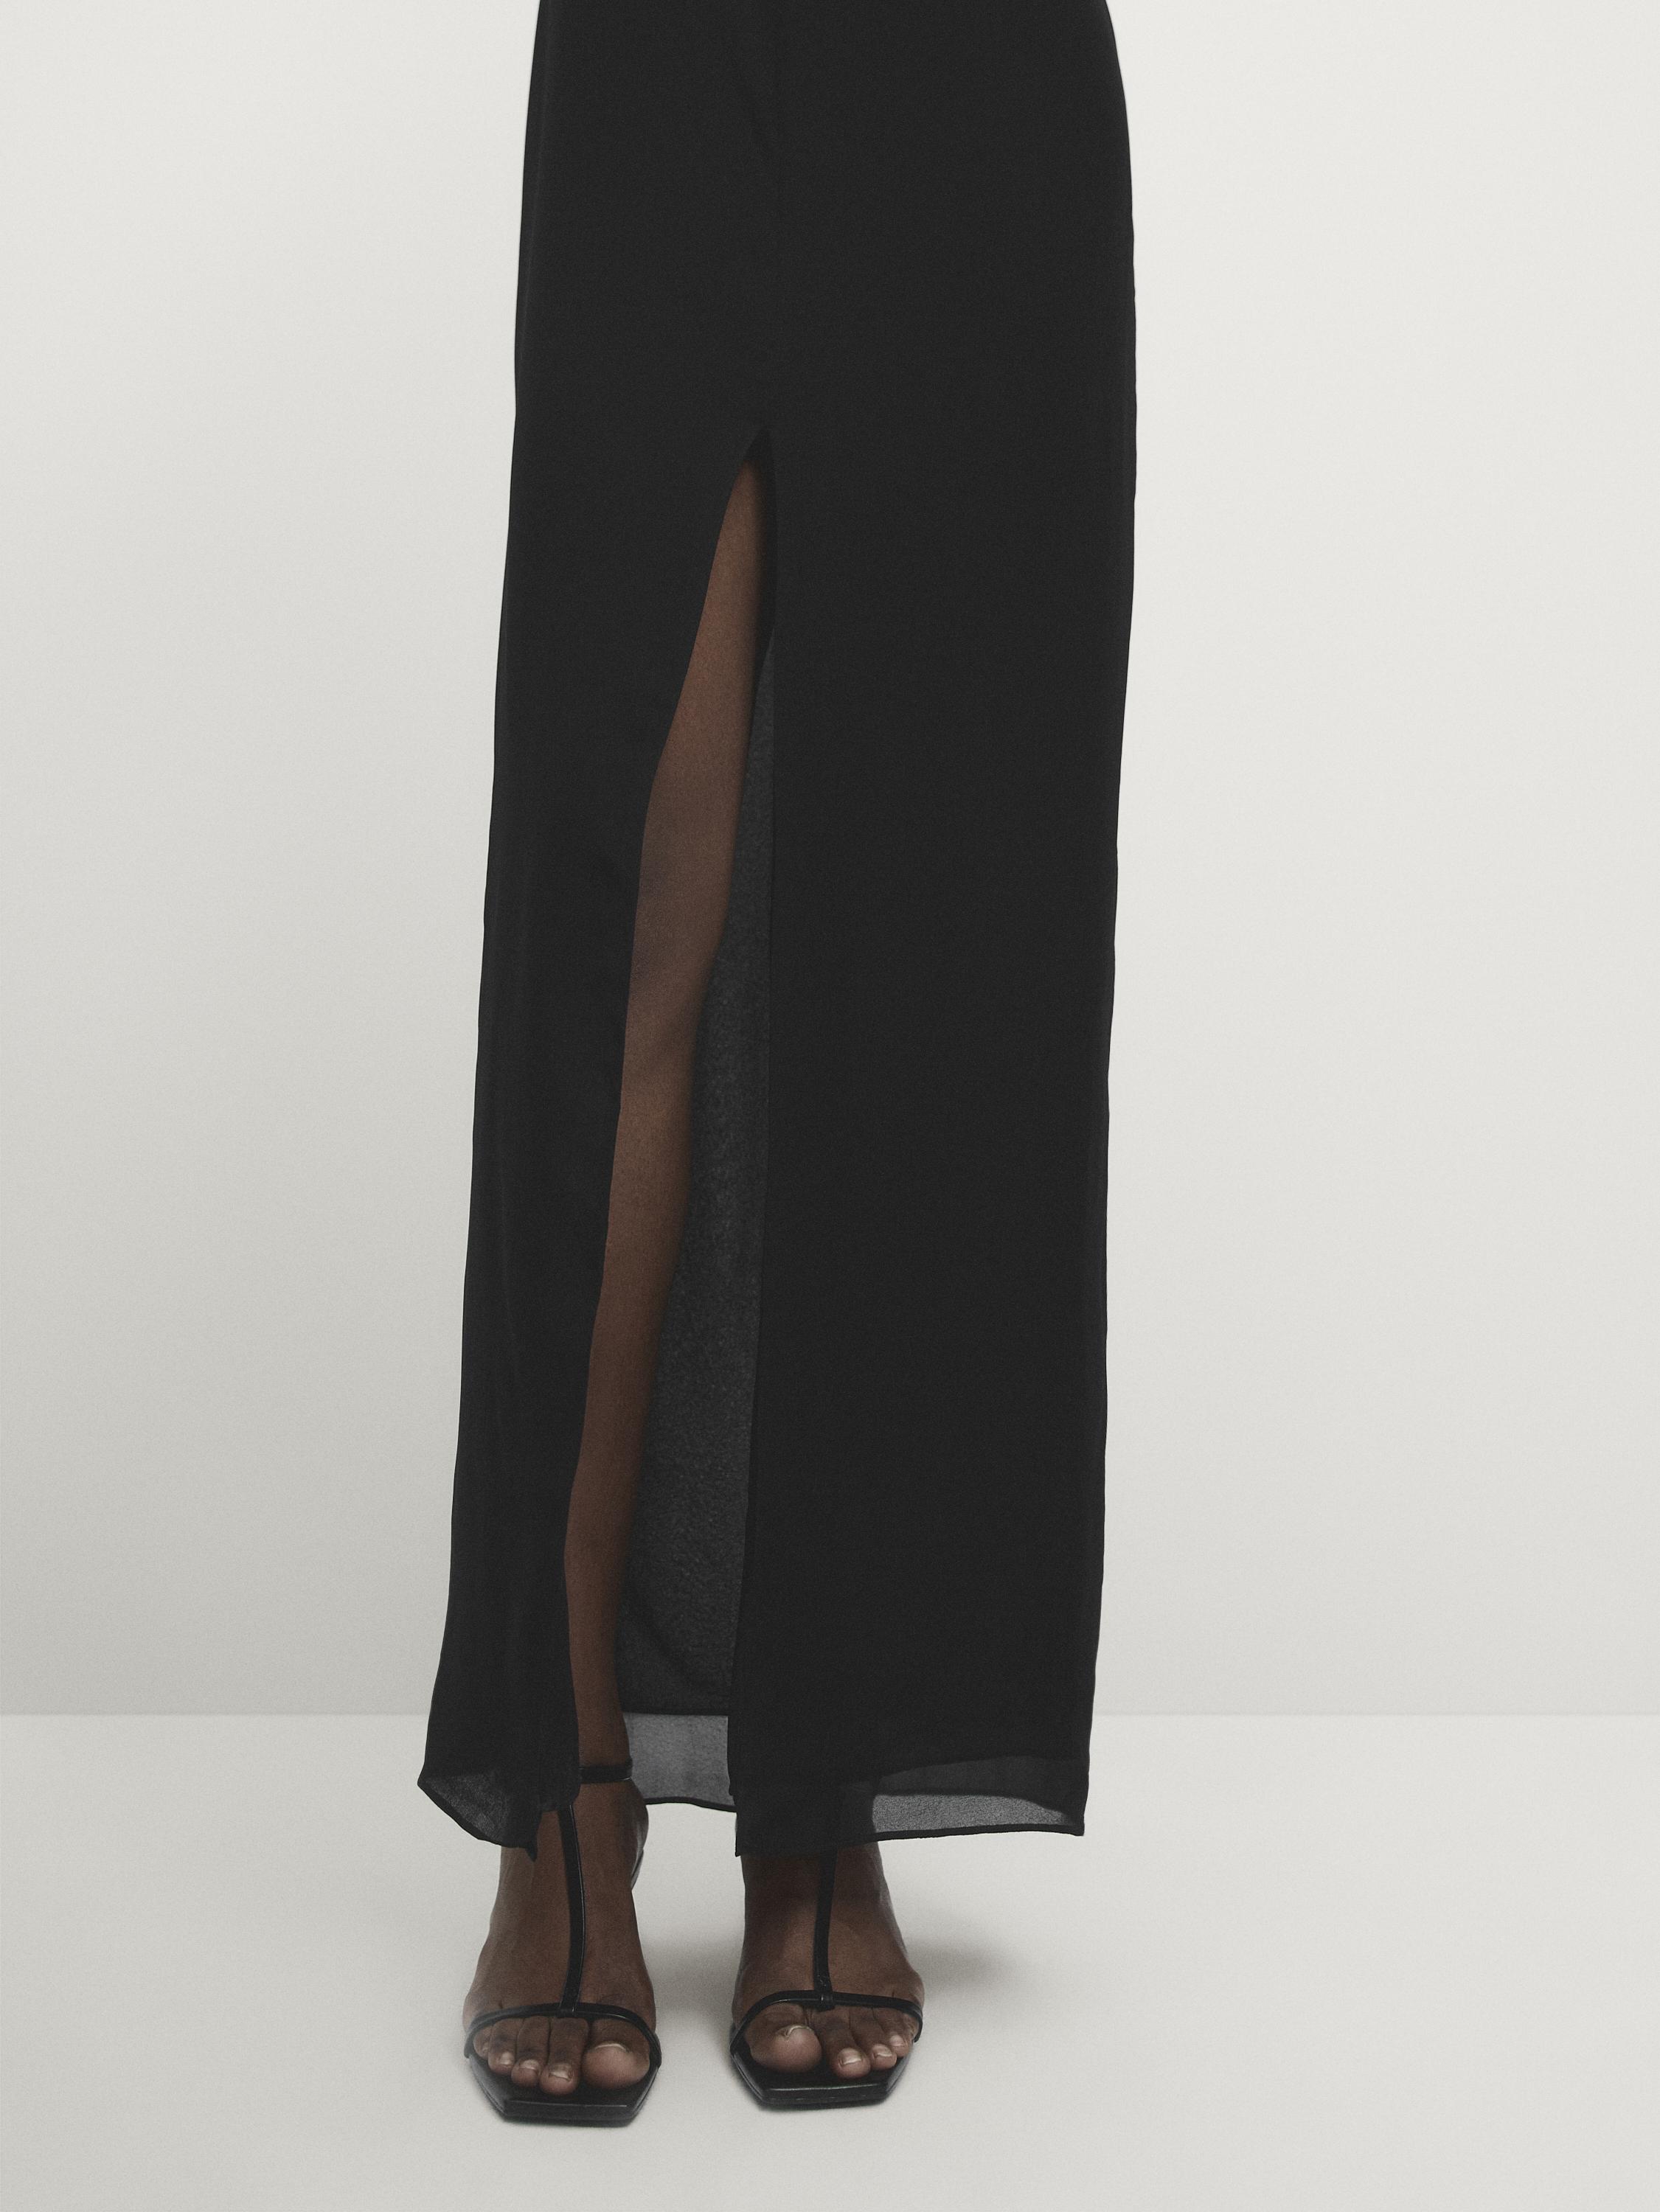 Strappy dress with slit detail - Studio - Black | ZARA United States